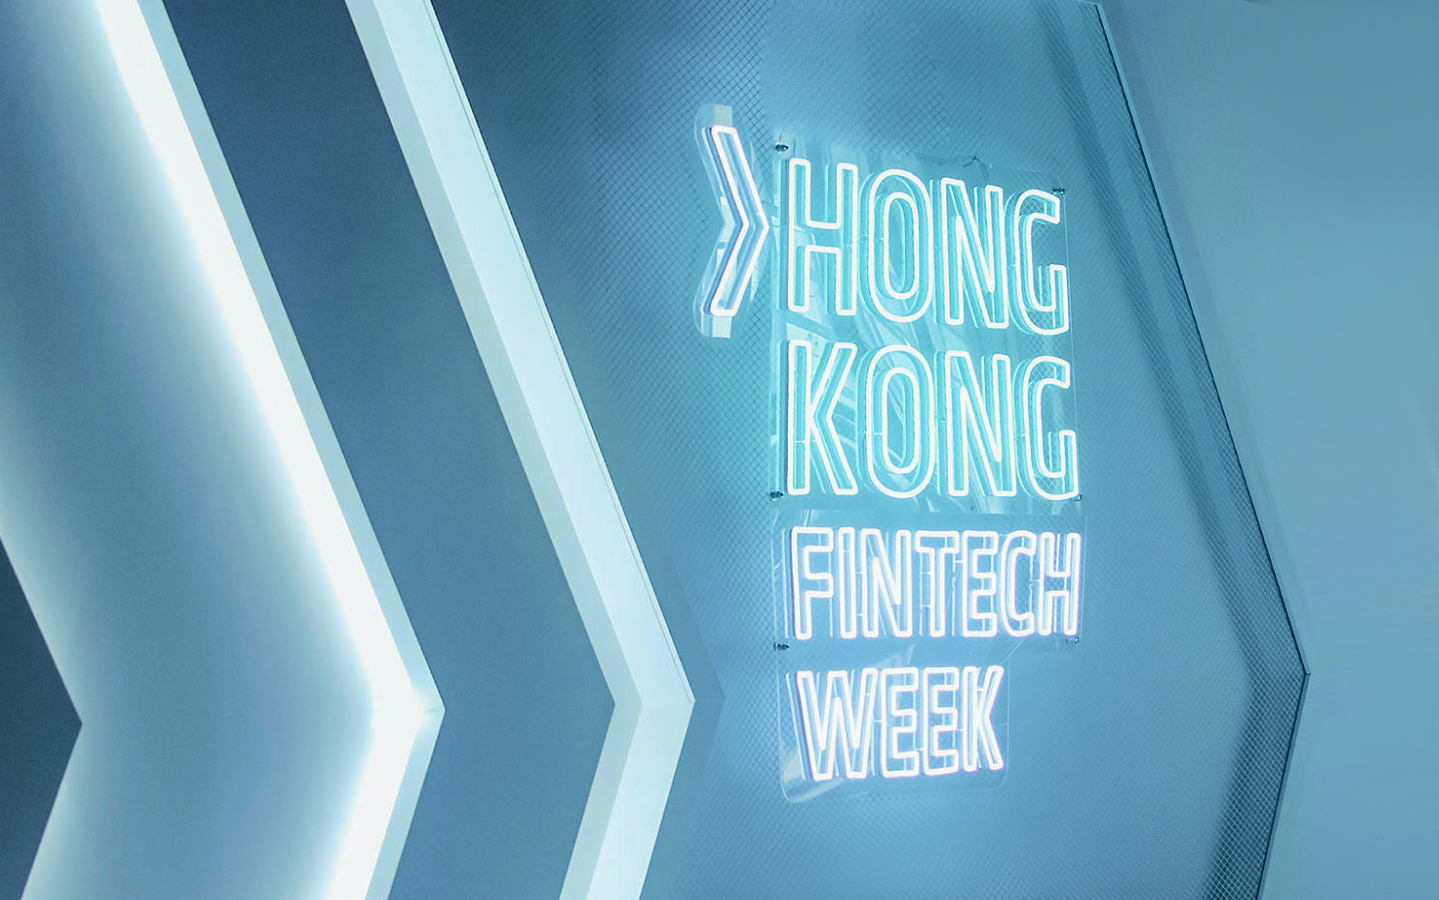 EMALI invited to showcase award-winning digital identity solution at Hong Kong Fintech Week 2020